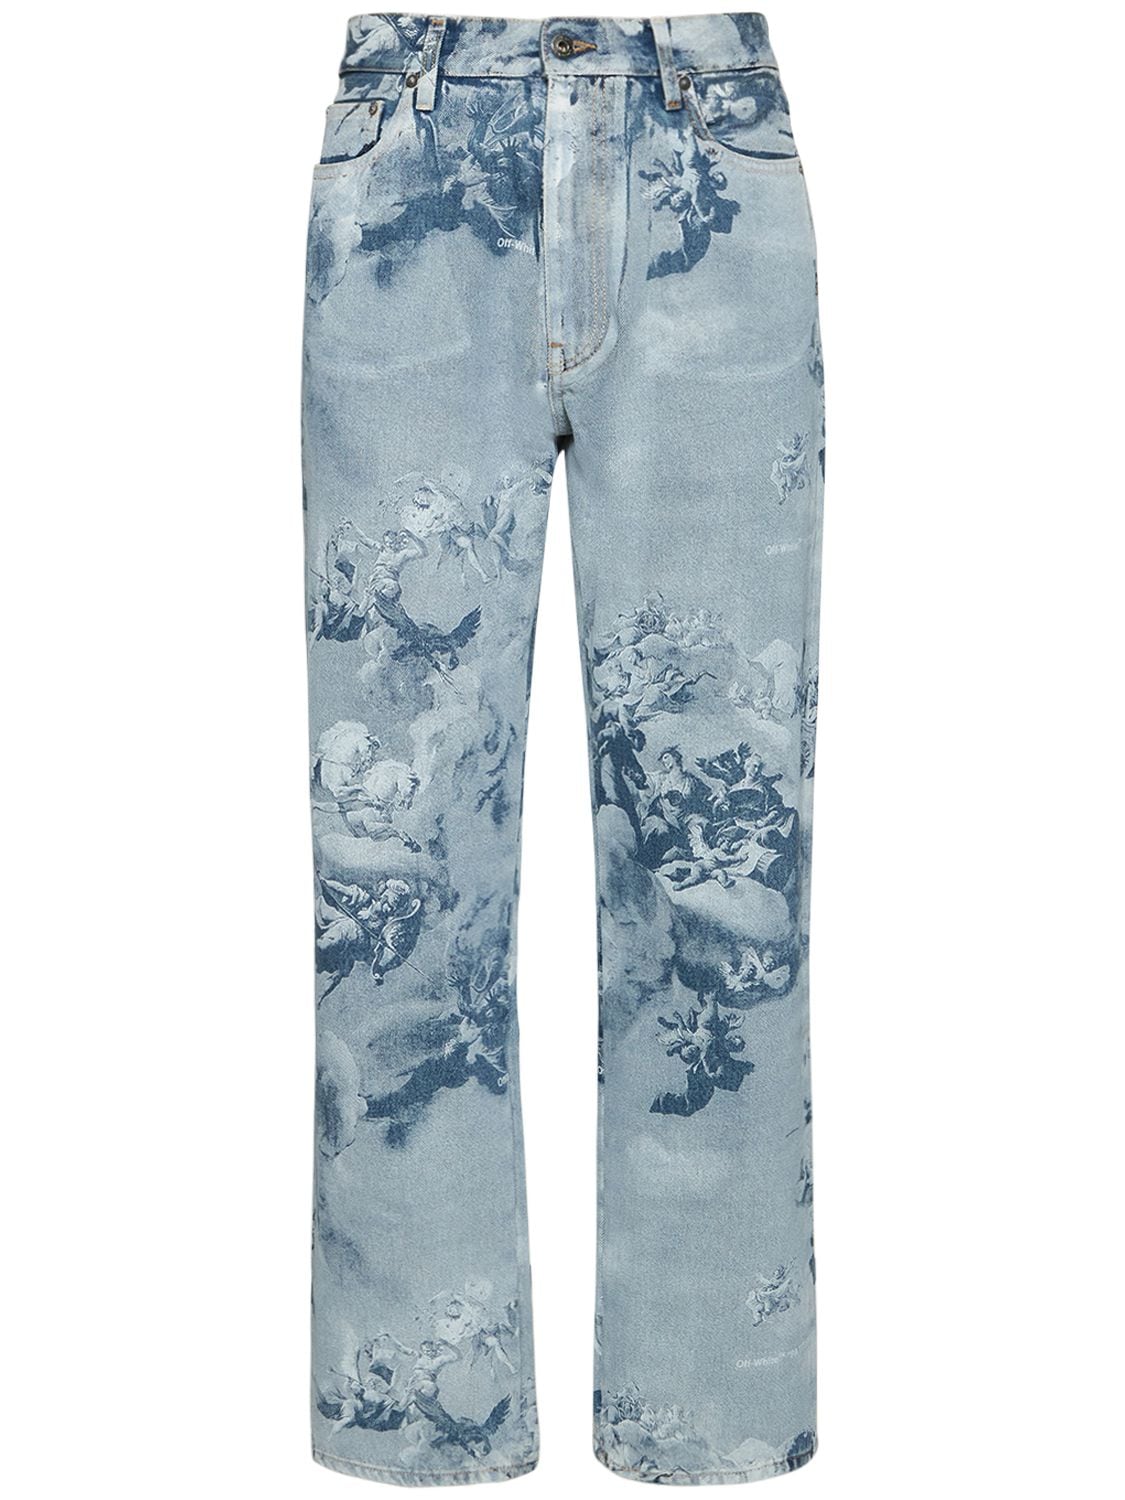 OFF-WHITE Printed Skate Denim Jeans